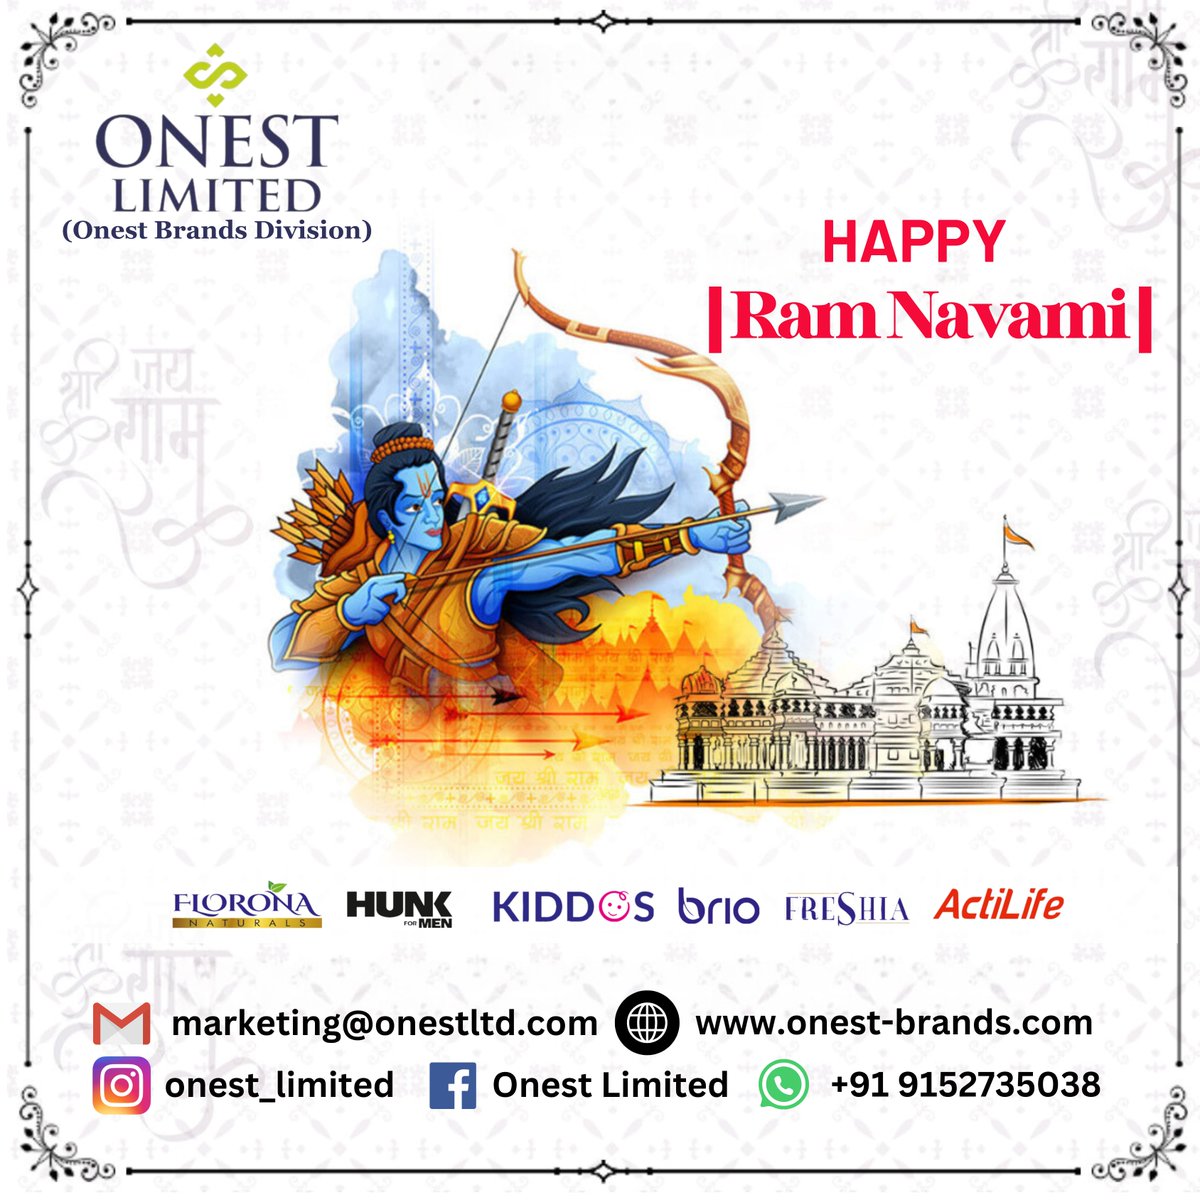 On the holy occasion of Ram Navami, I wish that Shri Ram fills your home with happiness, peace and prosperity. Happy Ram Navami!

#onestlimited #onest #onestbrands #branding #hunk #floronanaturals #kiddos #actilife #freshia #brio #ramnavami #ram #happyramnavami #fmcg #exporter